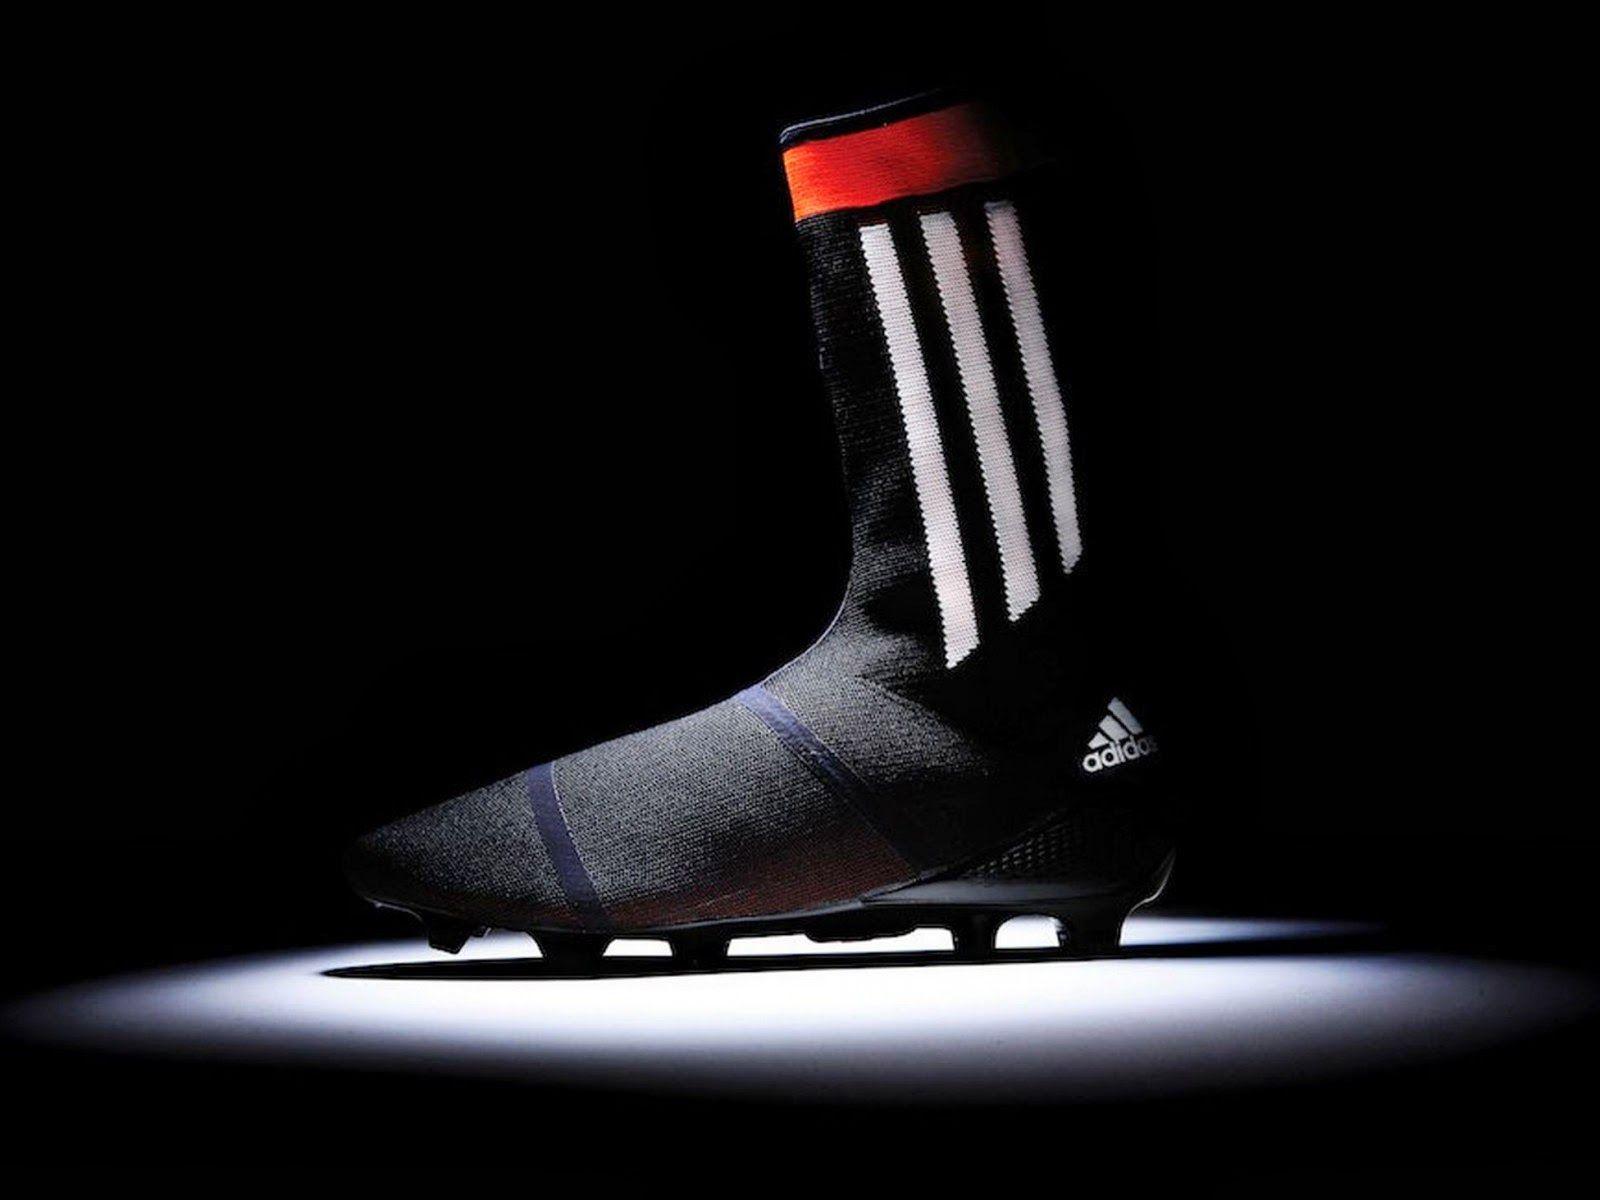 Adidas Boots HD Wallpaper 8. Football Wallpaper